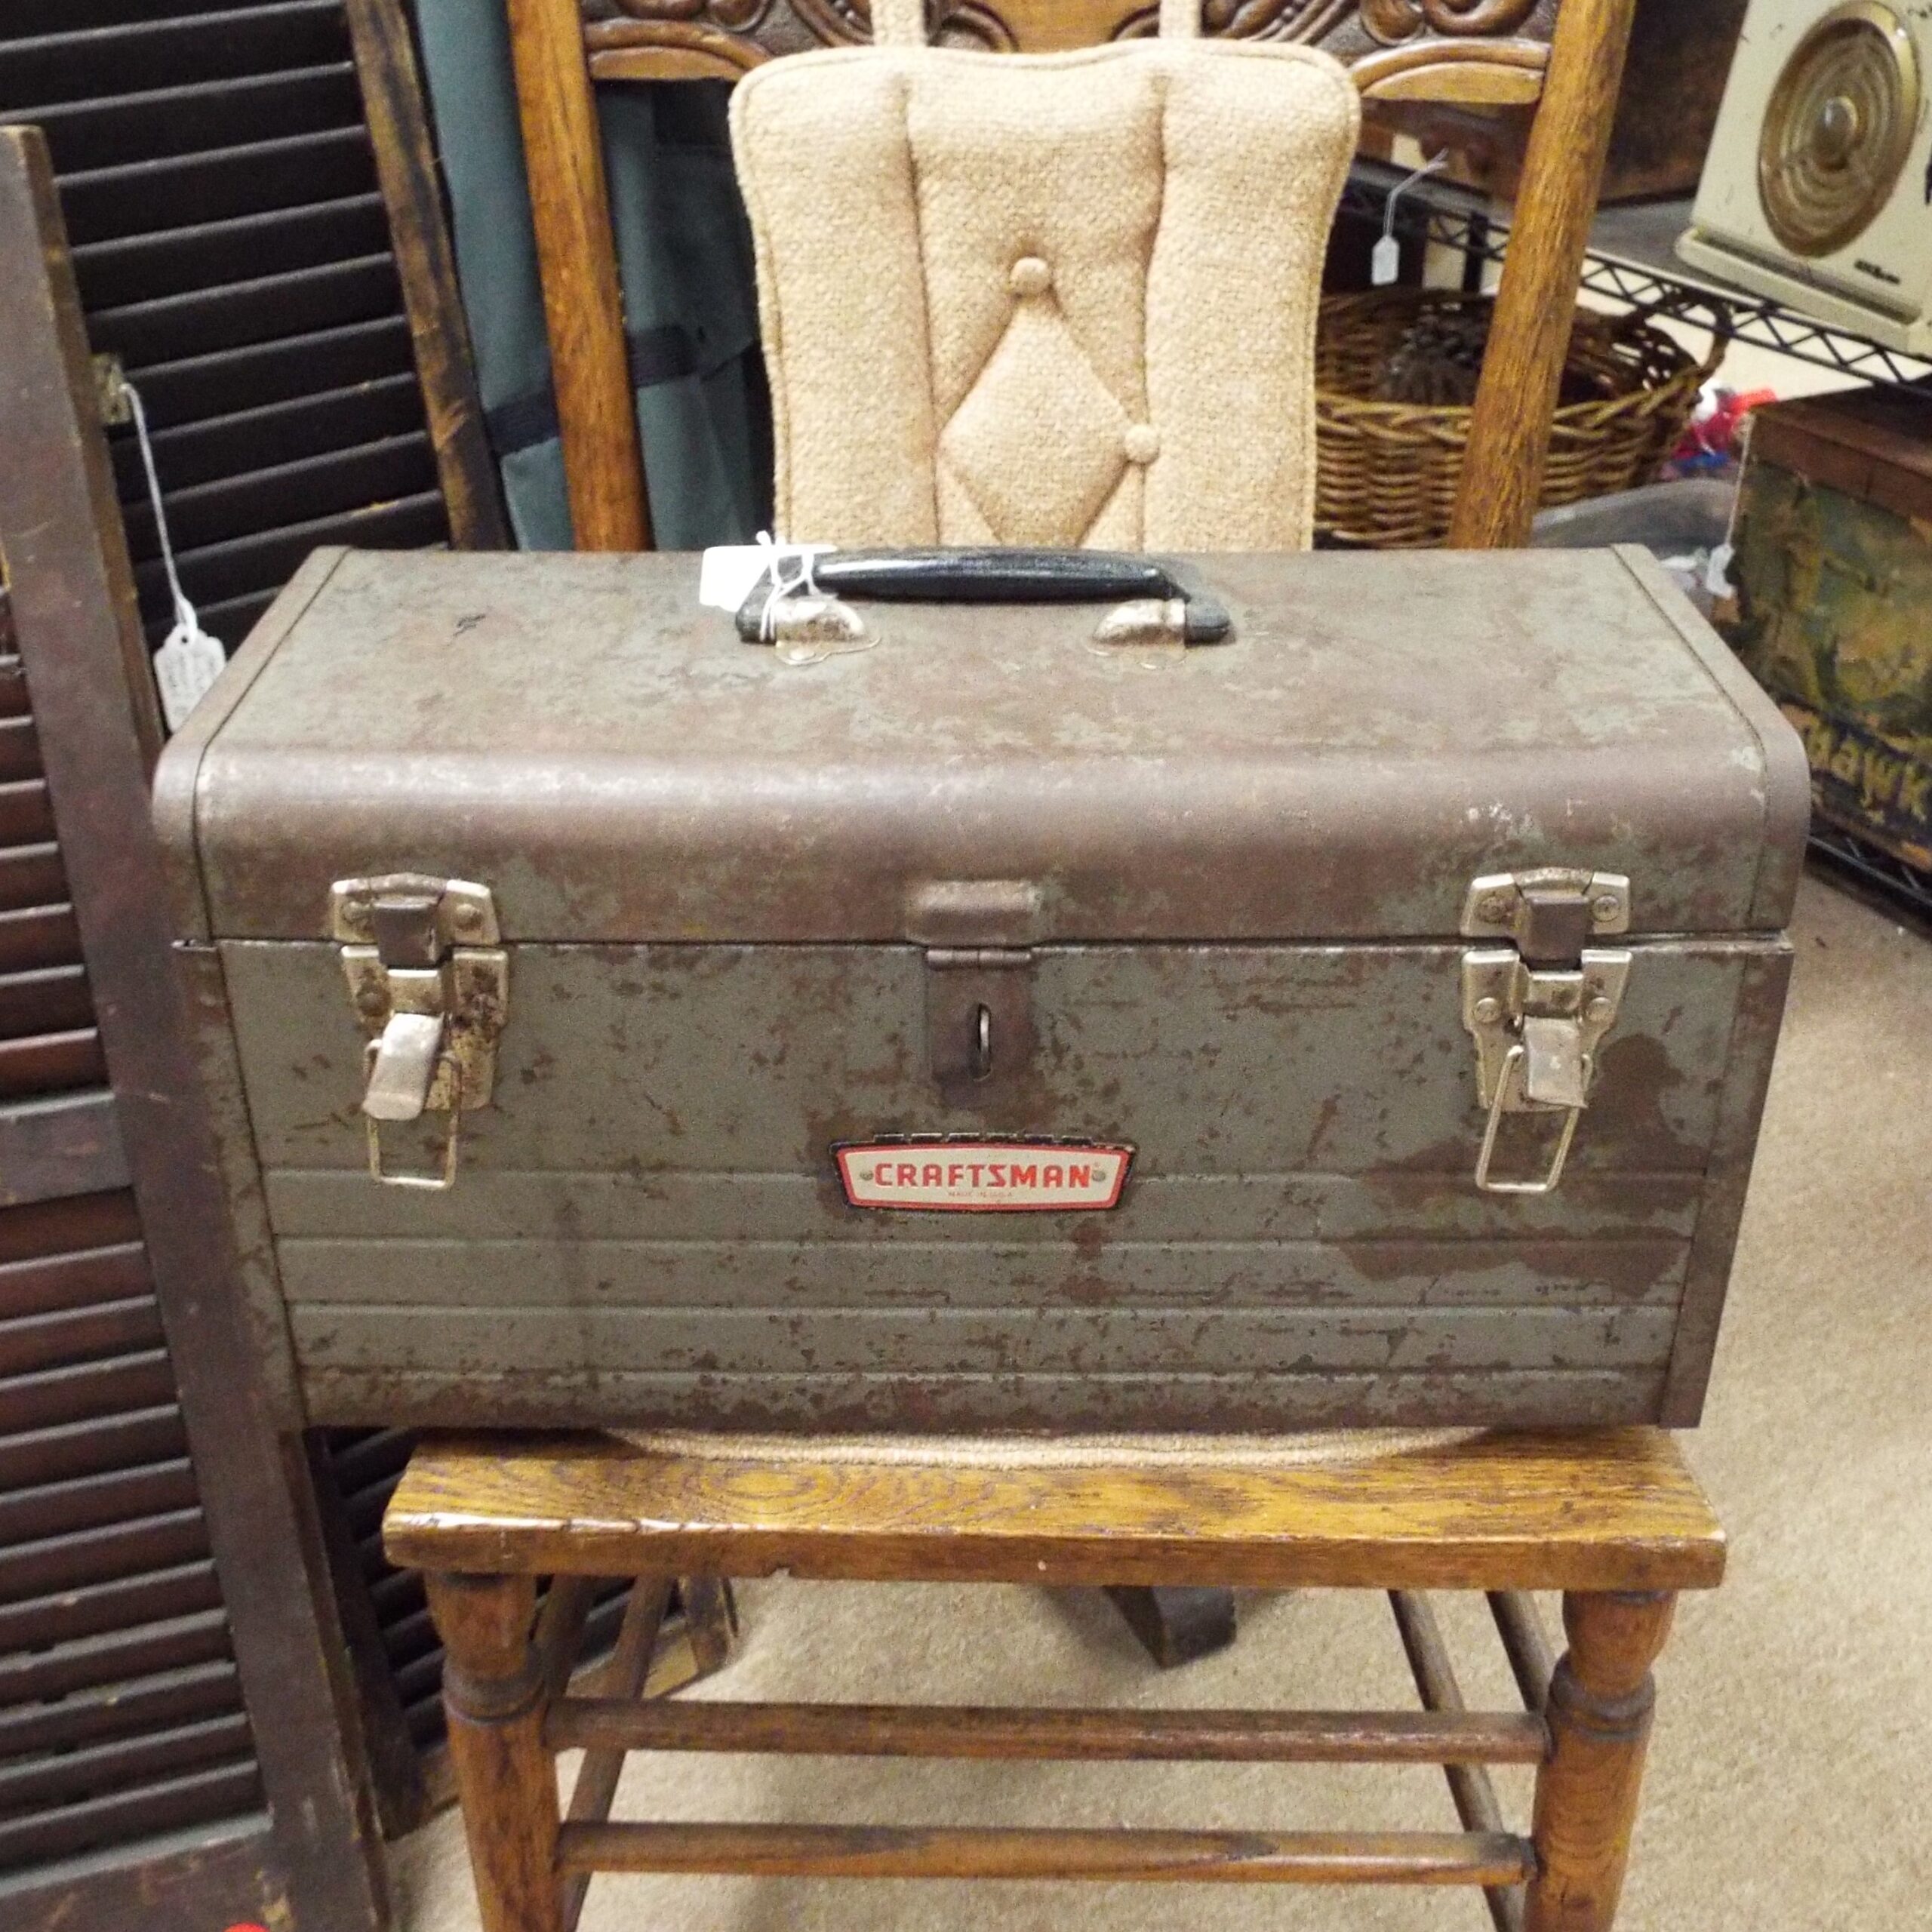 Vintage Craftsman Metal Toolbox with Tray – It's Bazaar on 21st Street